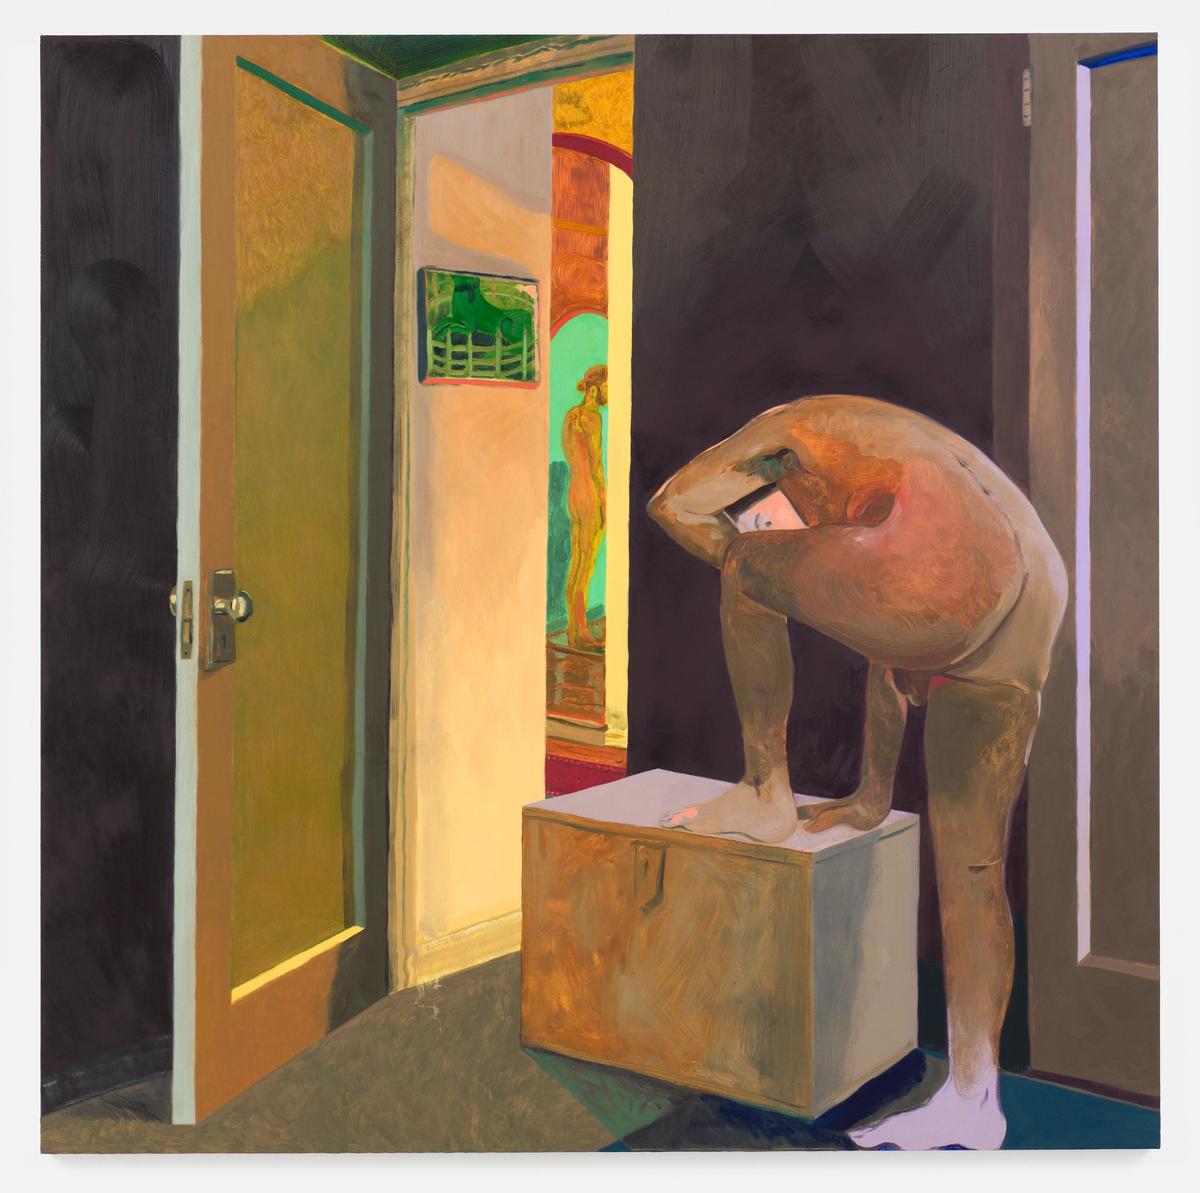 Anthony Cudahy, Entrance/receiver, 2022, huile sur toile, 183 x 183 cm. © Image A. Mole. Courtesy Semiose, Paris